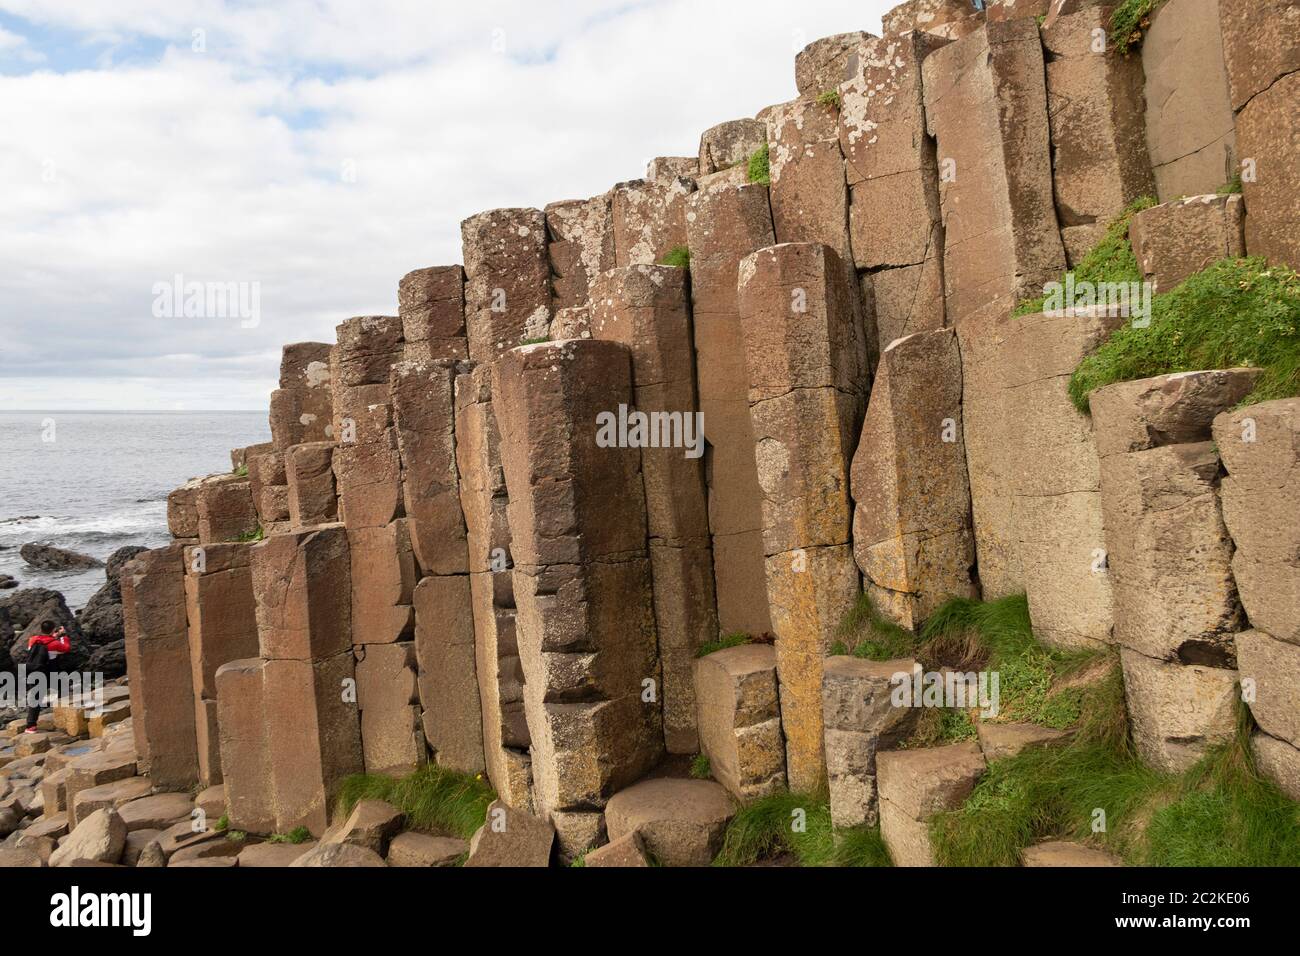 Geometrical basalt columns rock formations at Giant's Causeway, Northern Ireland, Europe Stock Photo